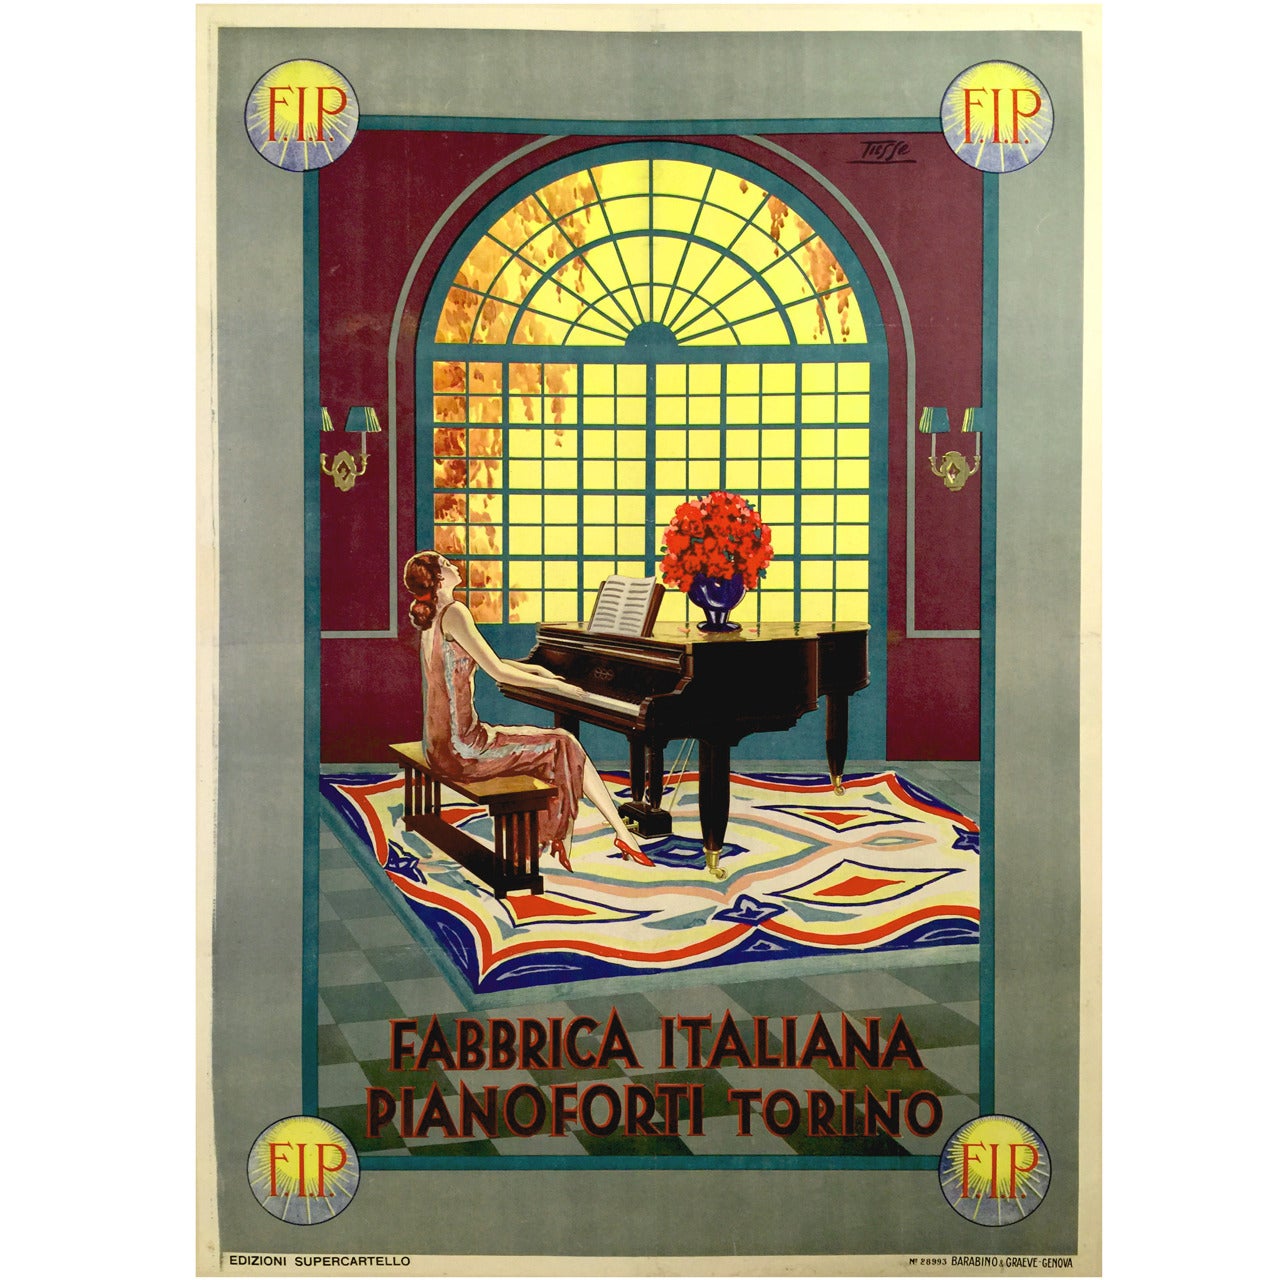 Italian Art Nouveau Period Poster for Fabric Italiana Pianoforte For Sale